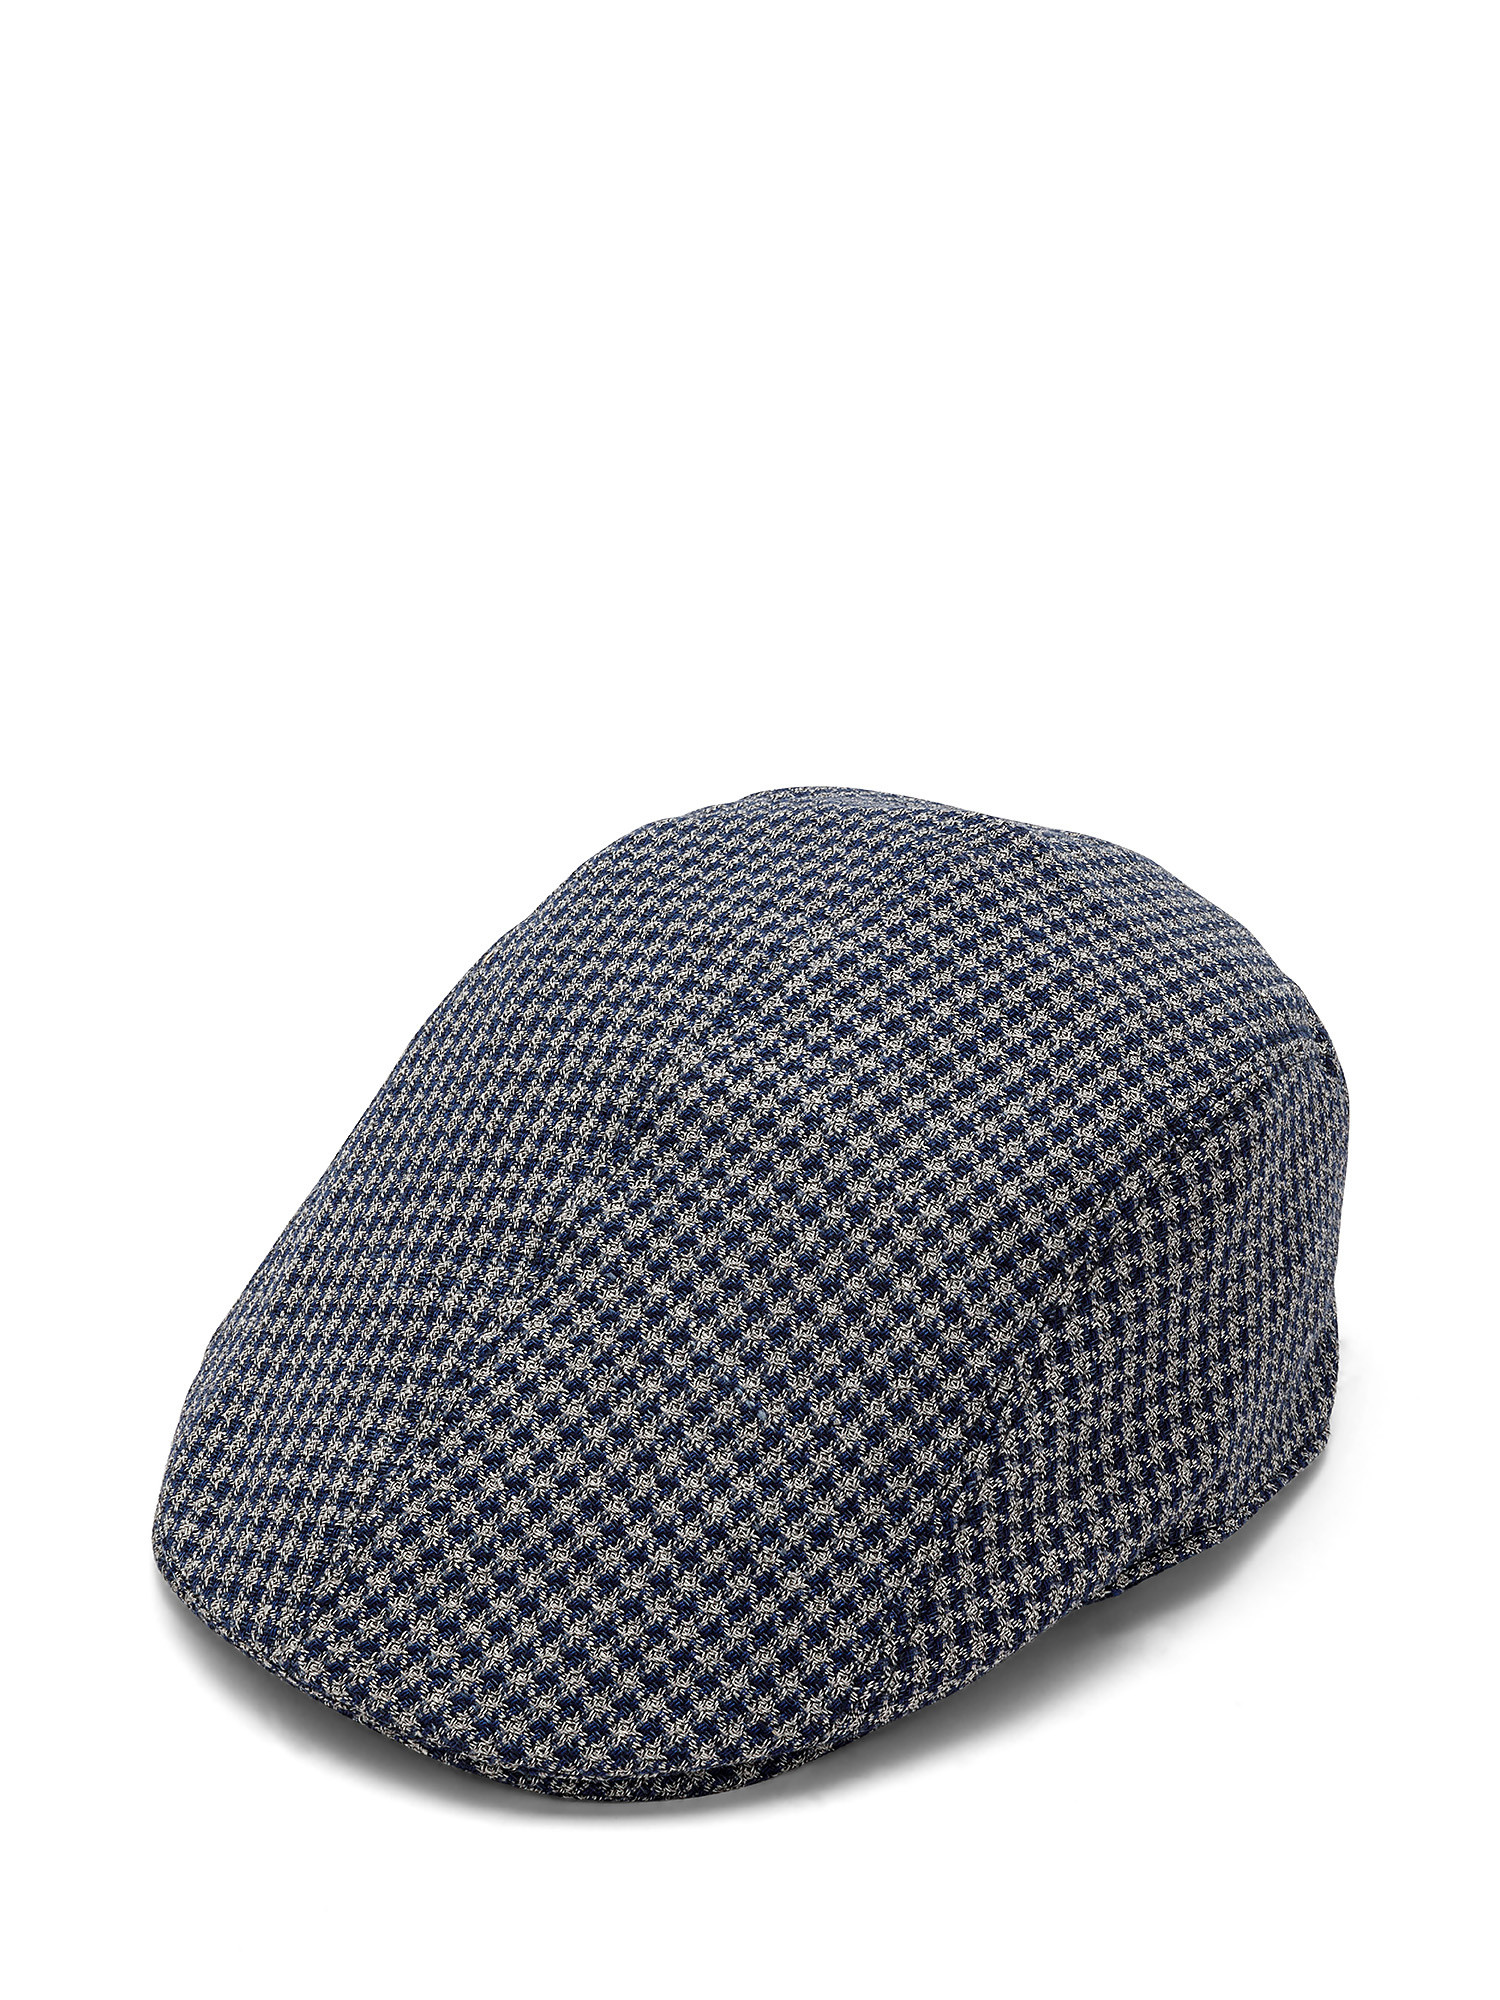 Luca D'Altieri - Linen cap, Grey, large image number 0